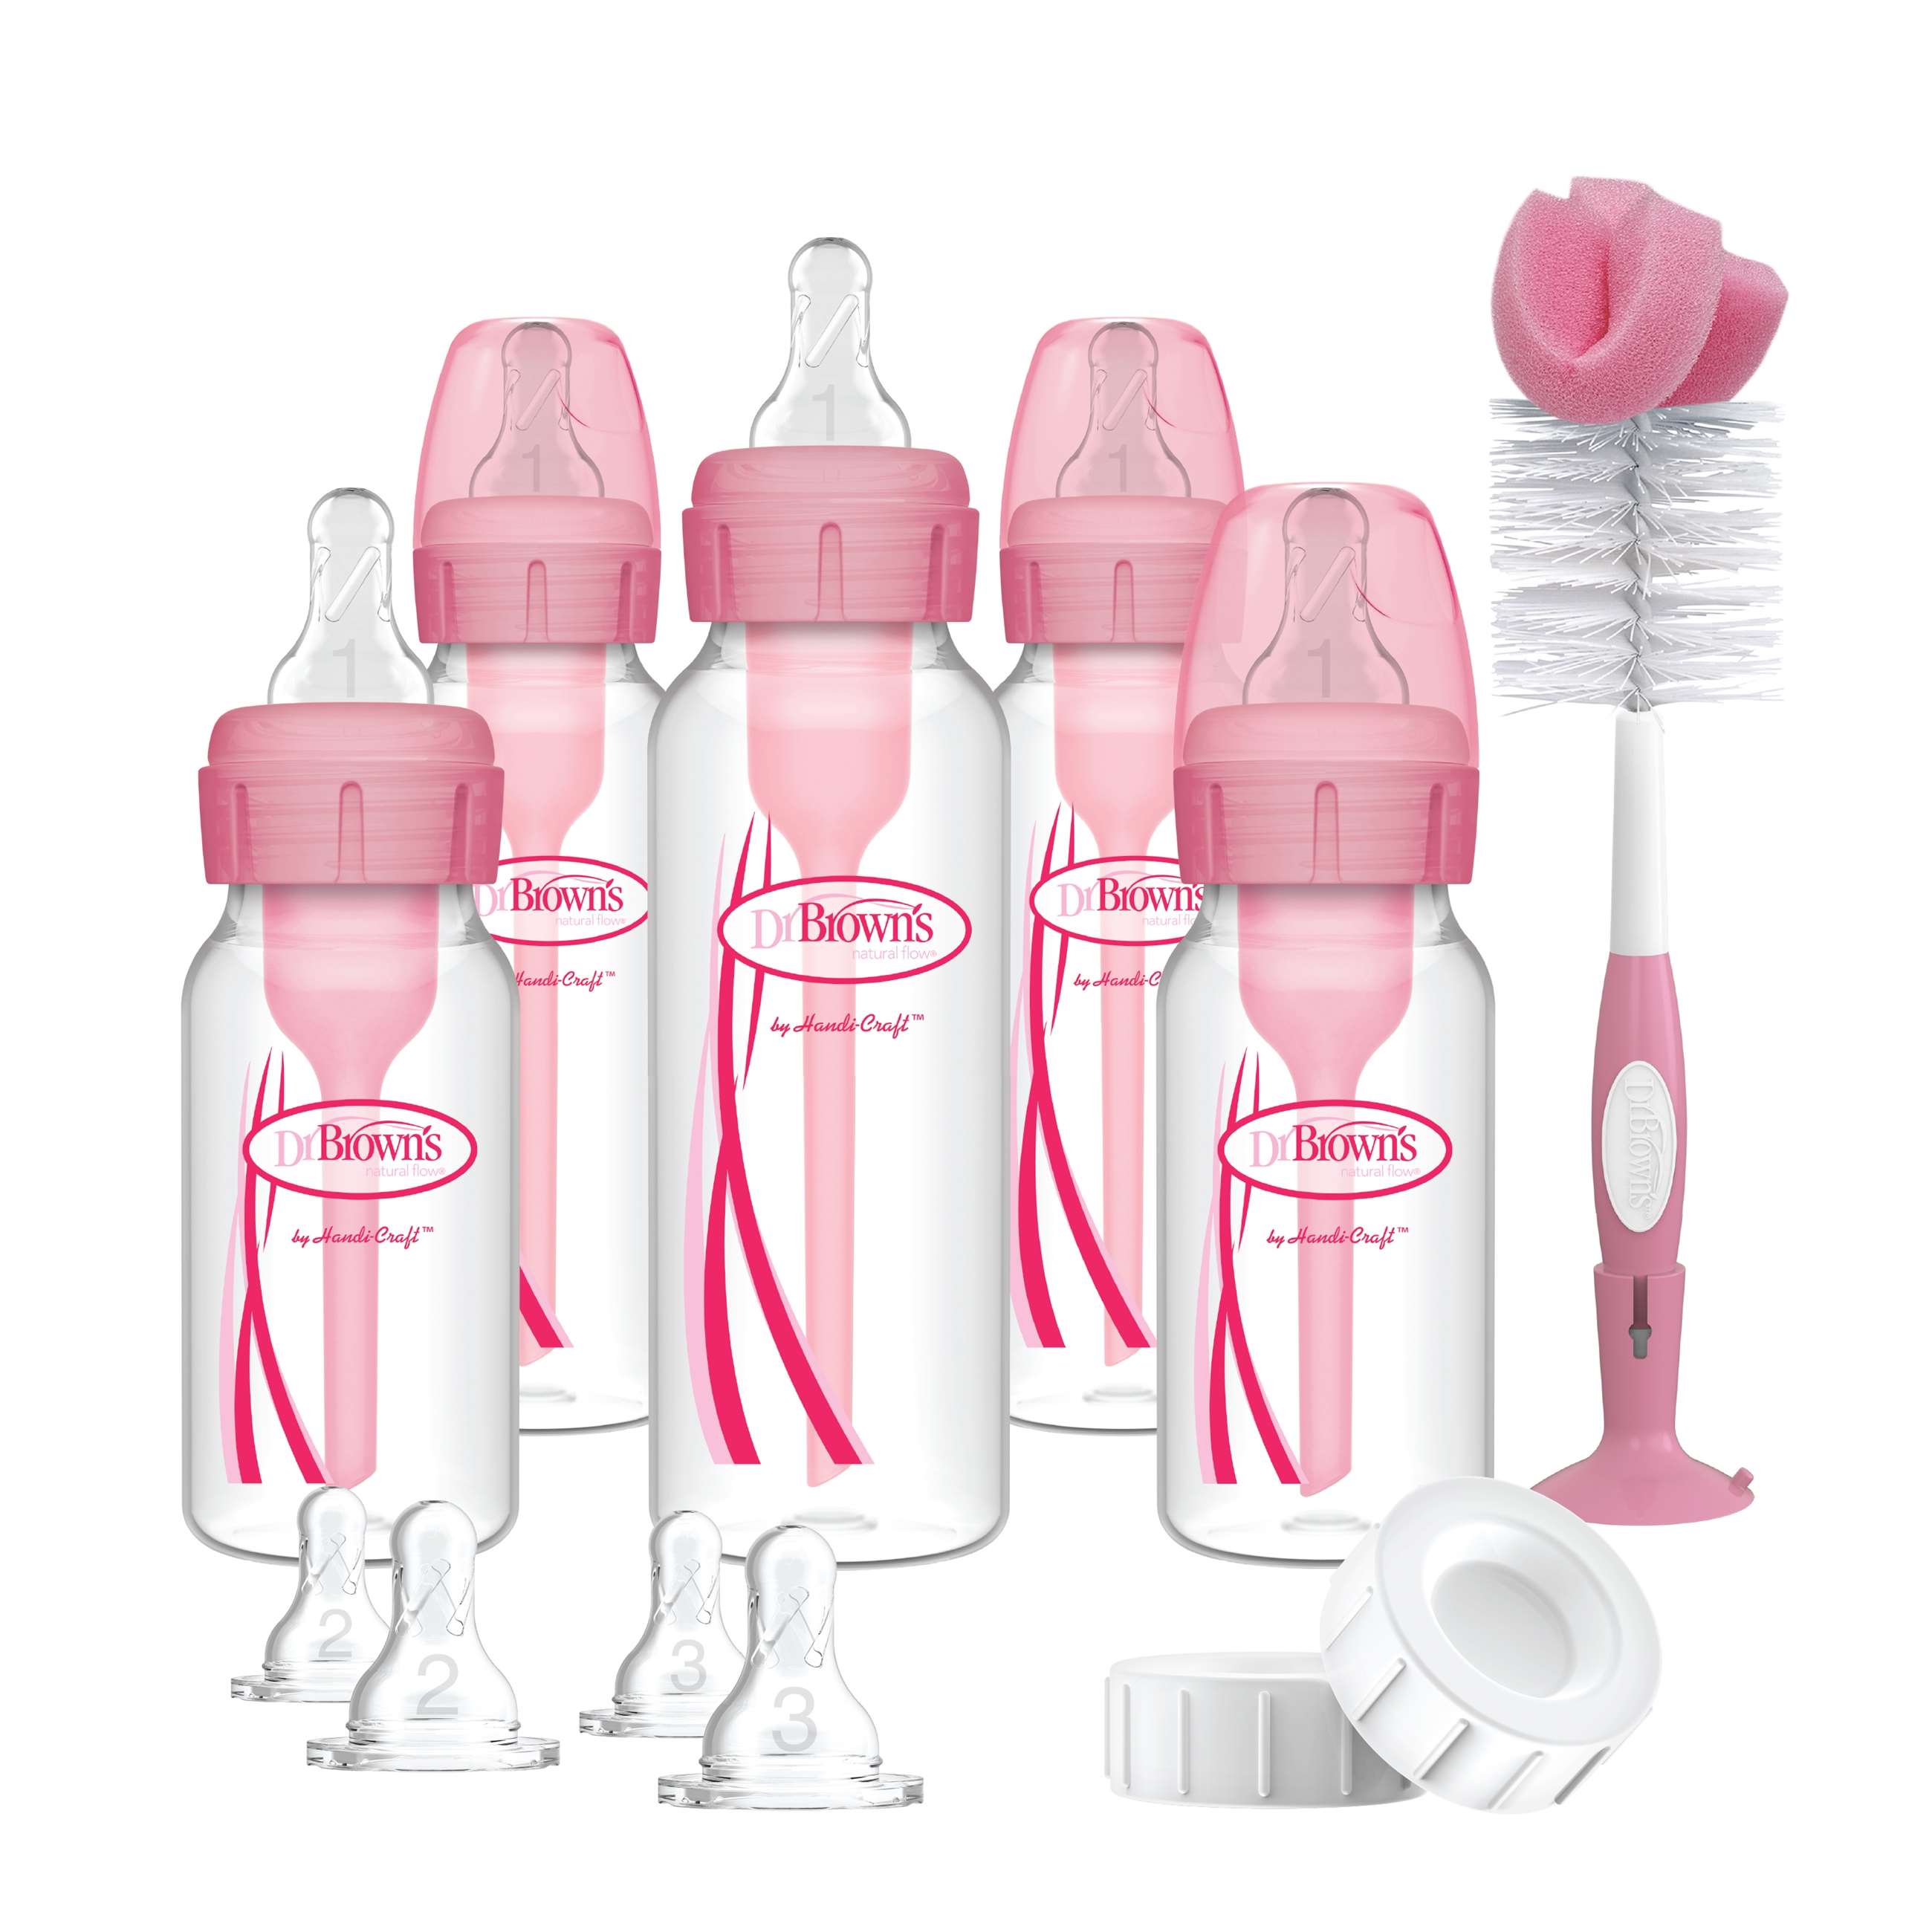 sb05307-intlx_product_options+_narrow_bottle_pink_gift_set